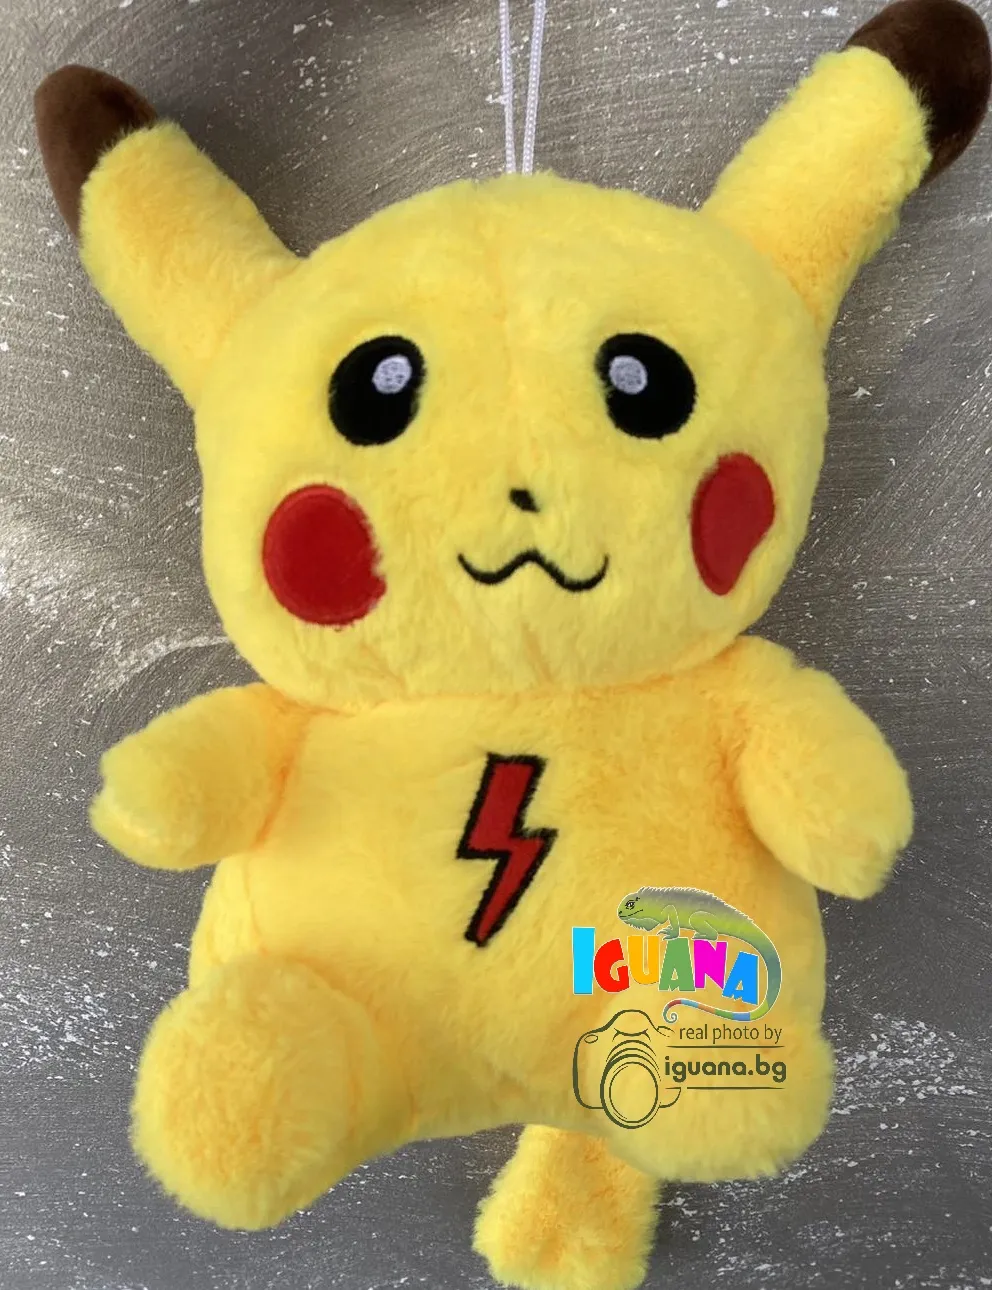 Плюшена играчка Пикачу/Pikachu, 25см плюшен Pokemon, Покемон  3